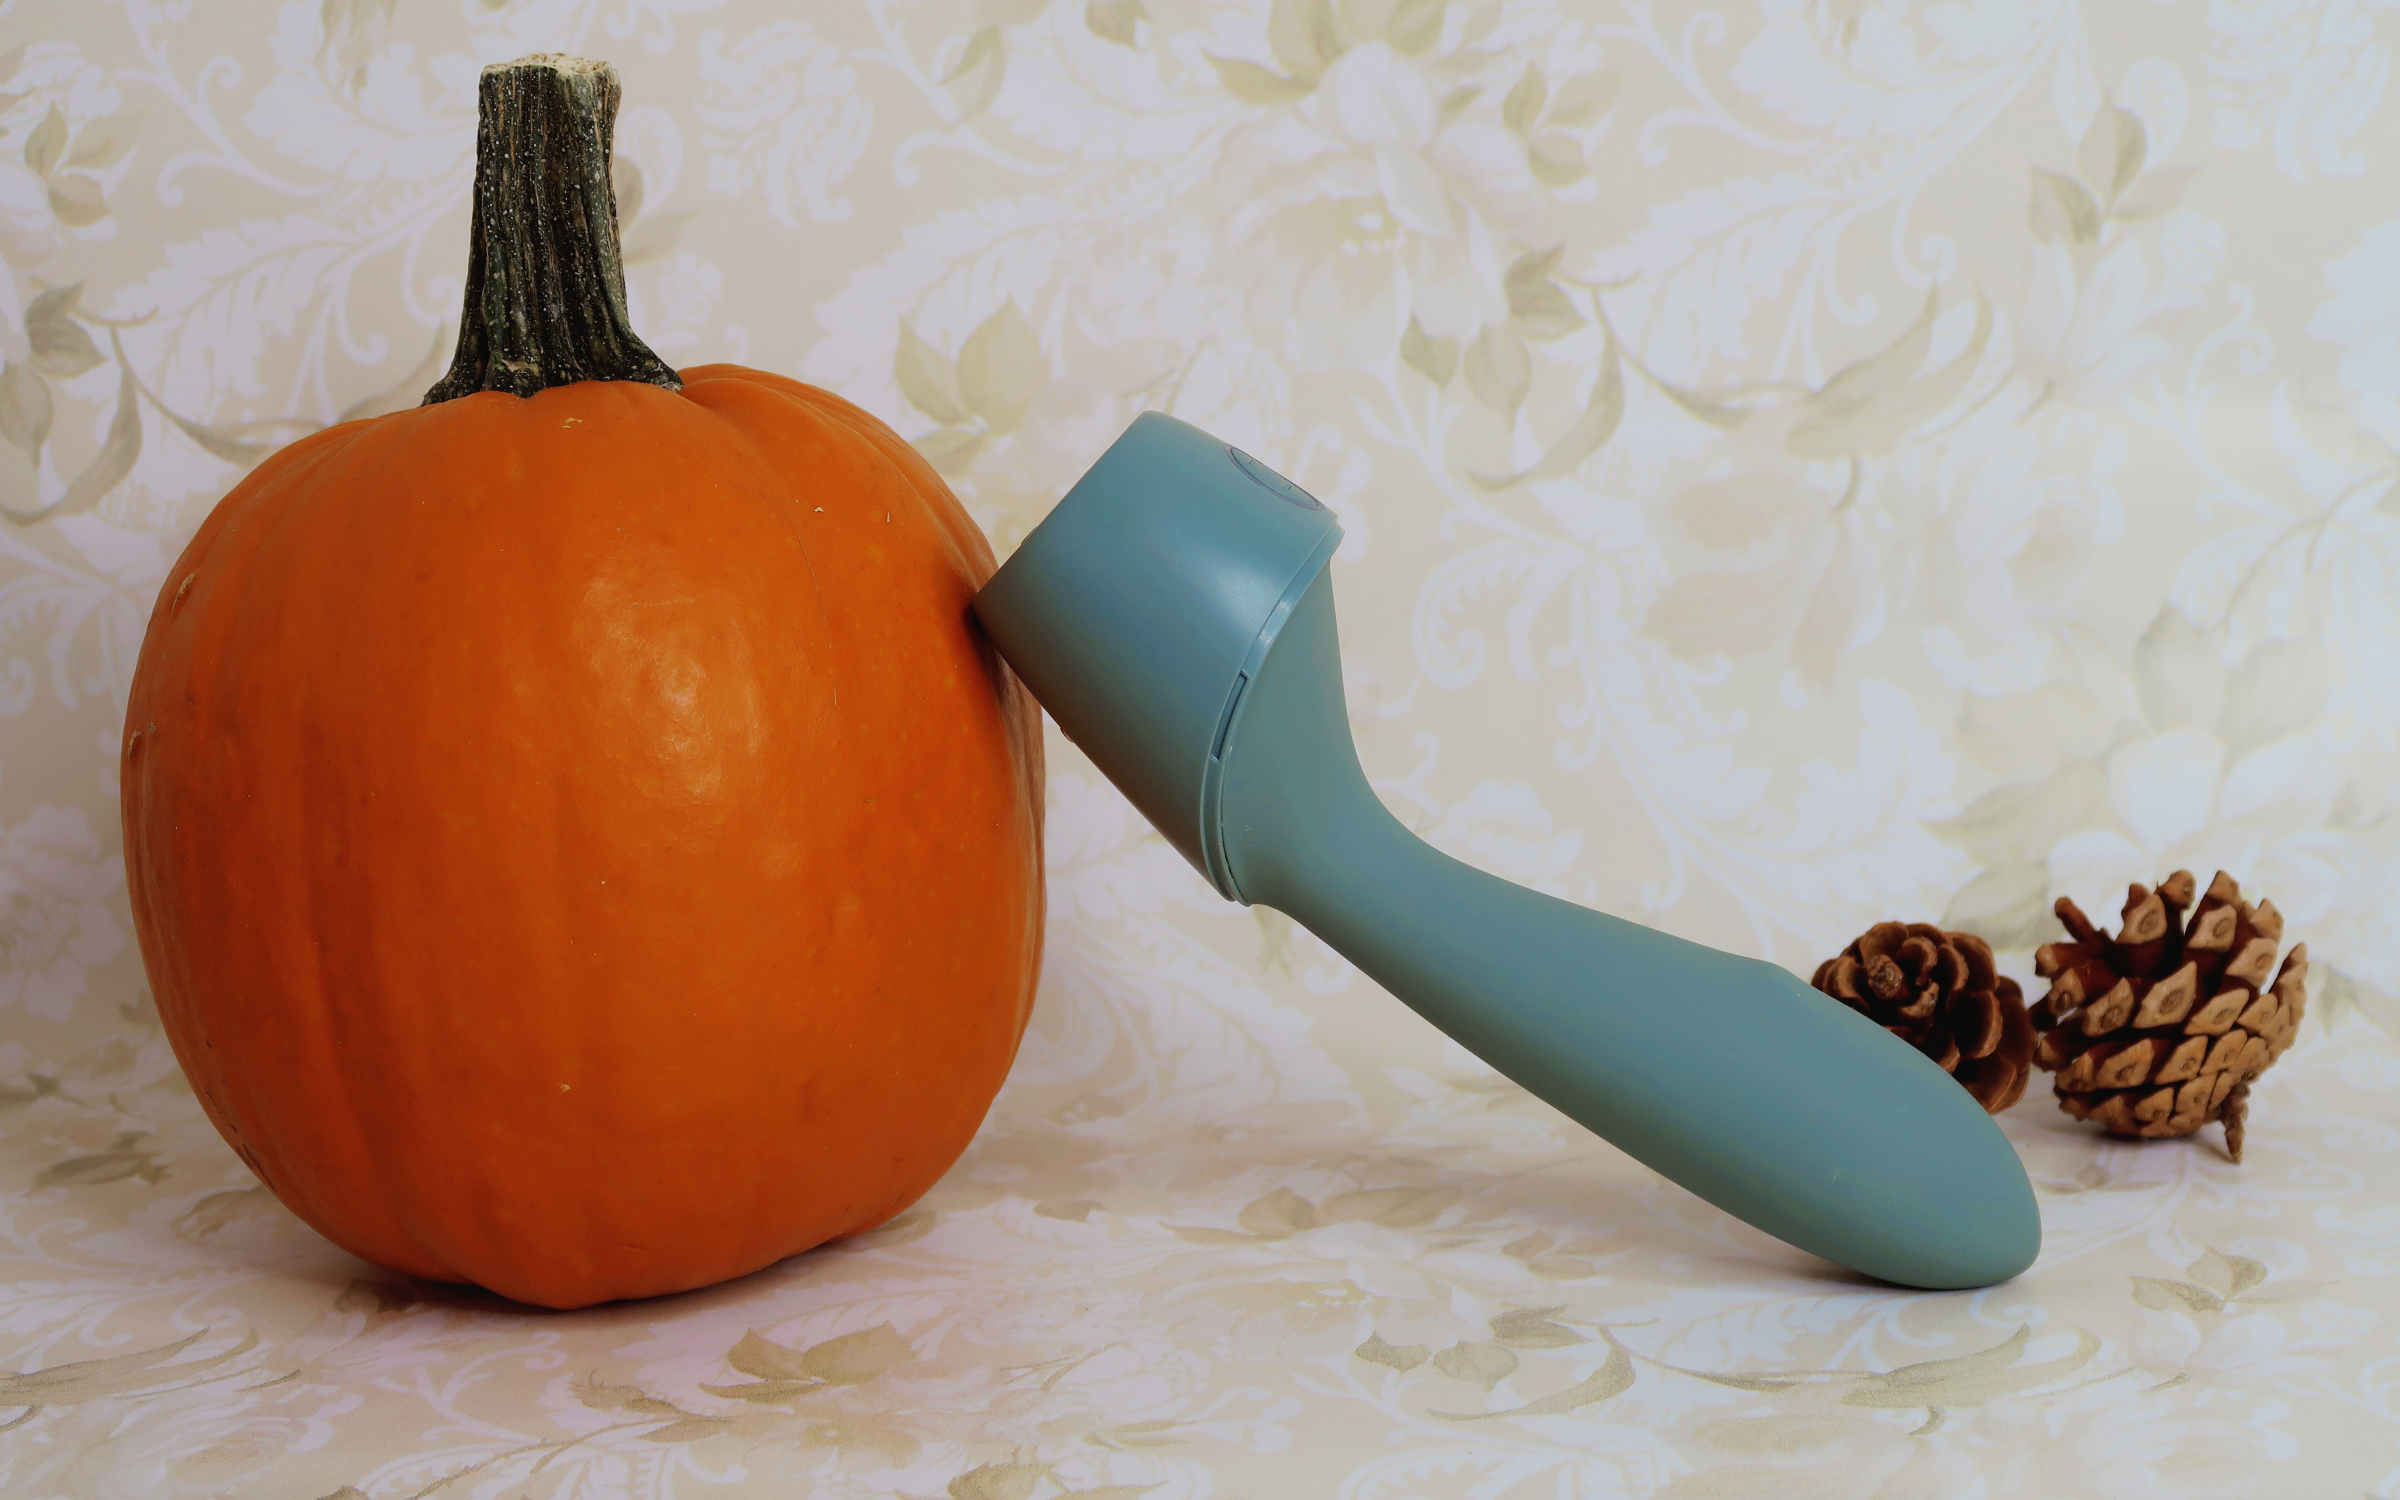 The Onda posed against a pumpkin.